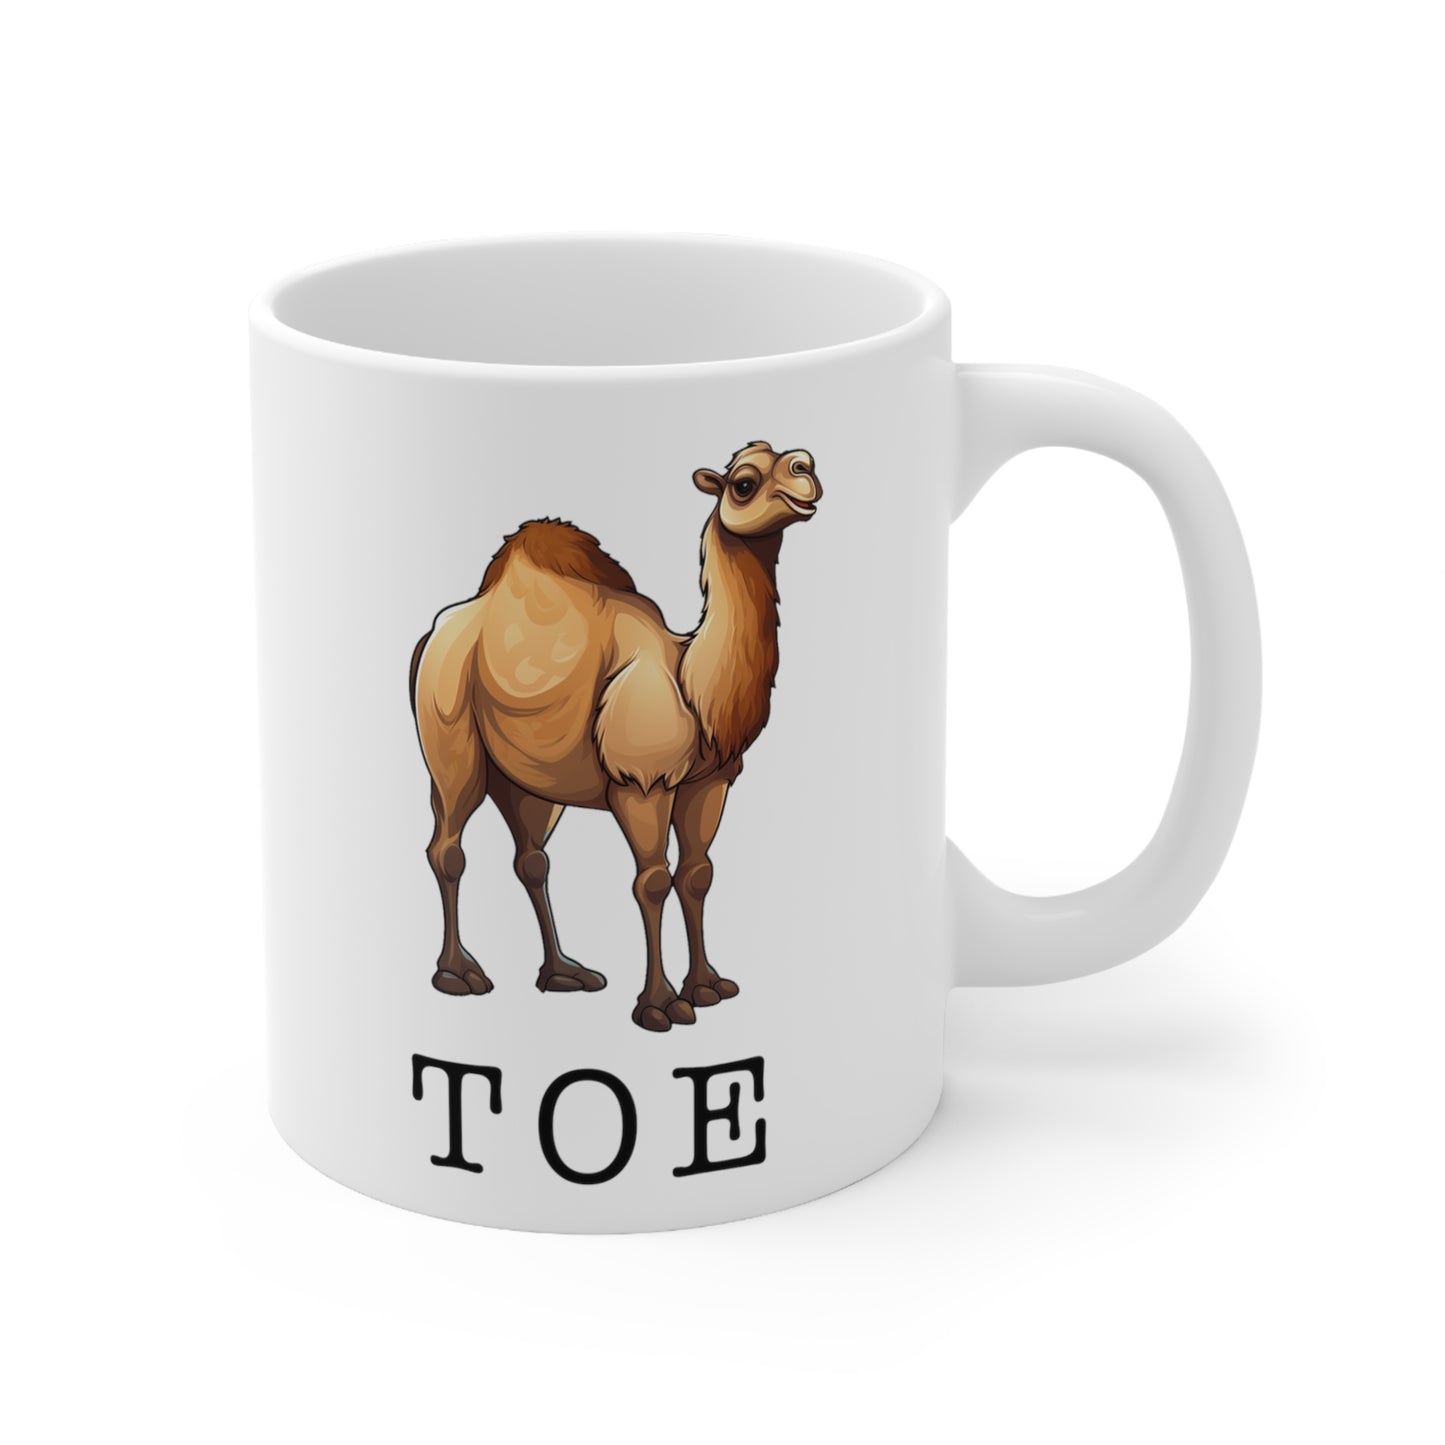 Camel Toe - The novelty/gift coffee mug!